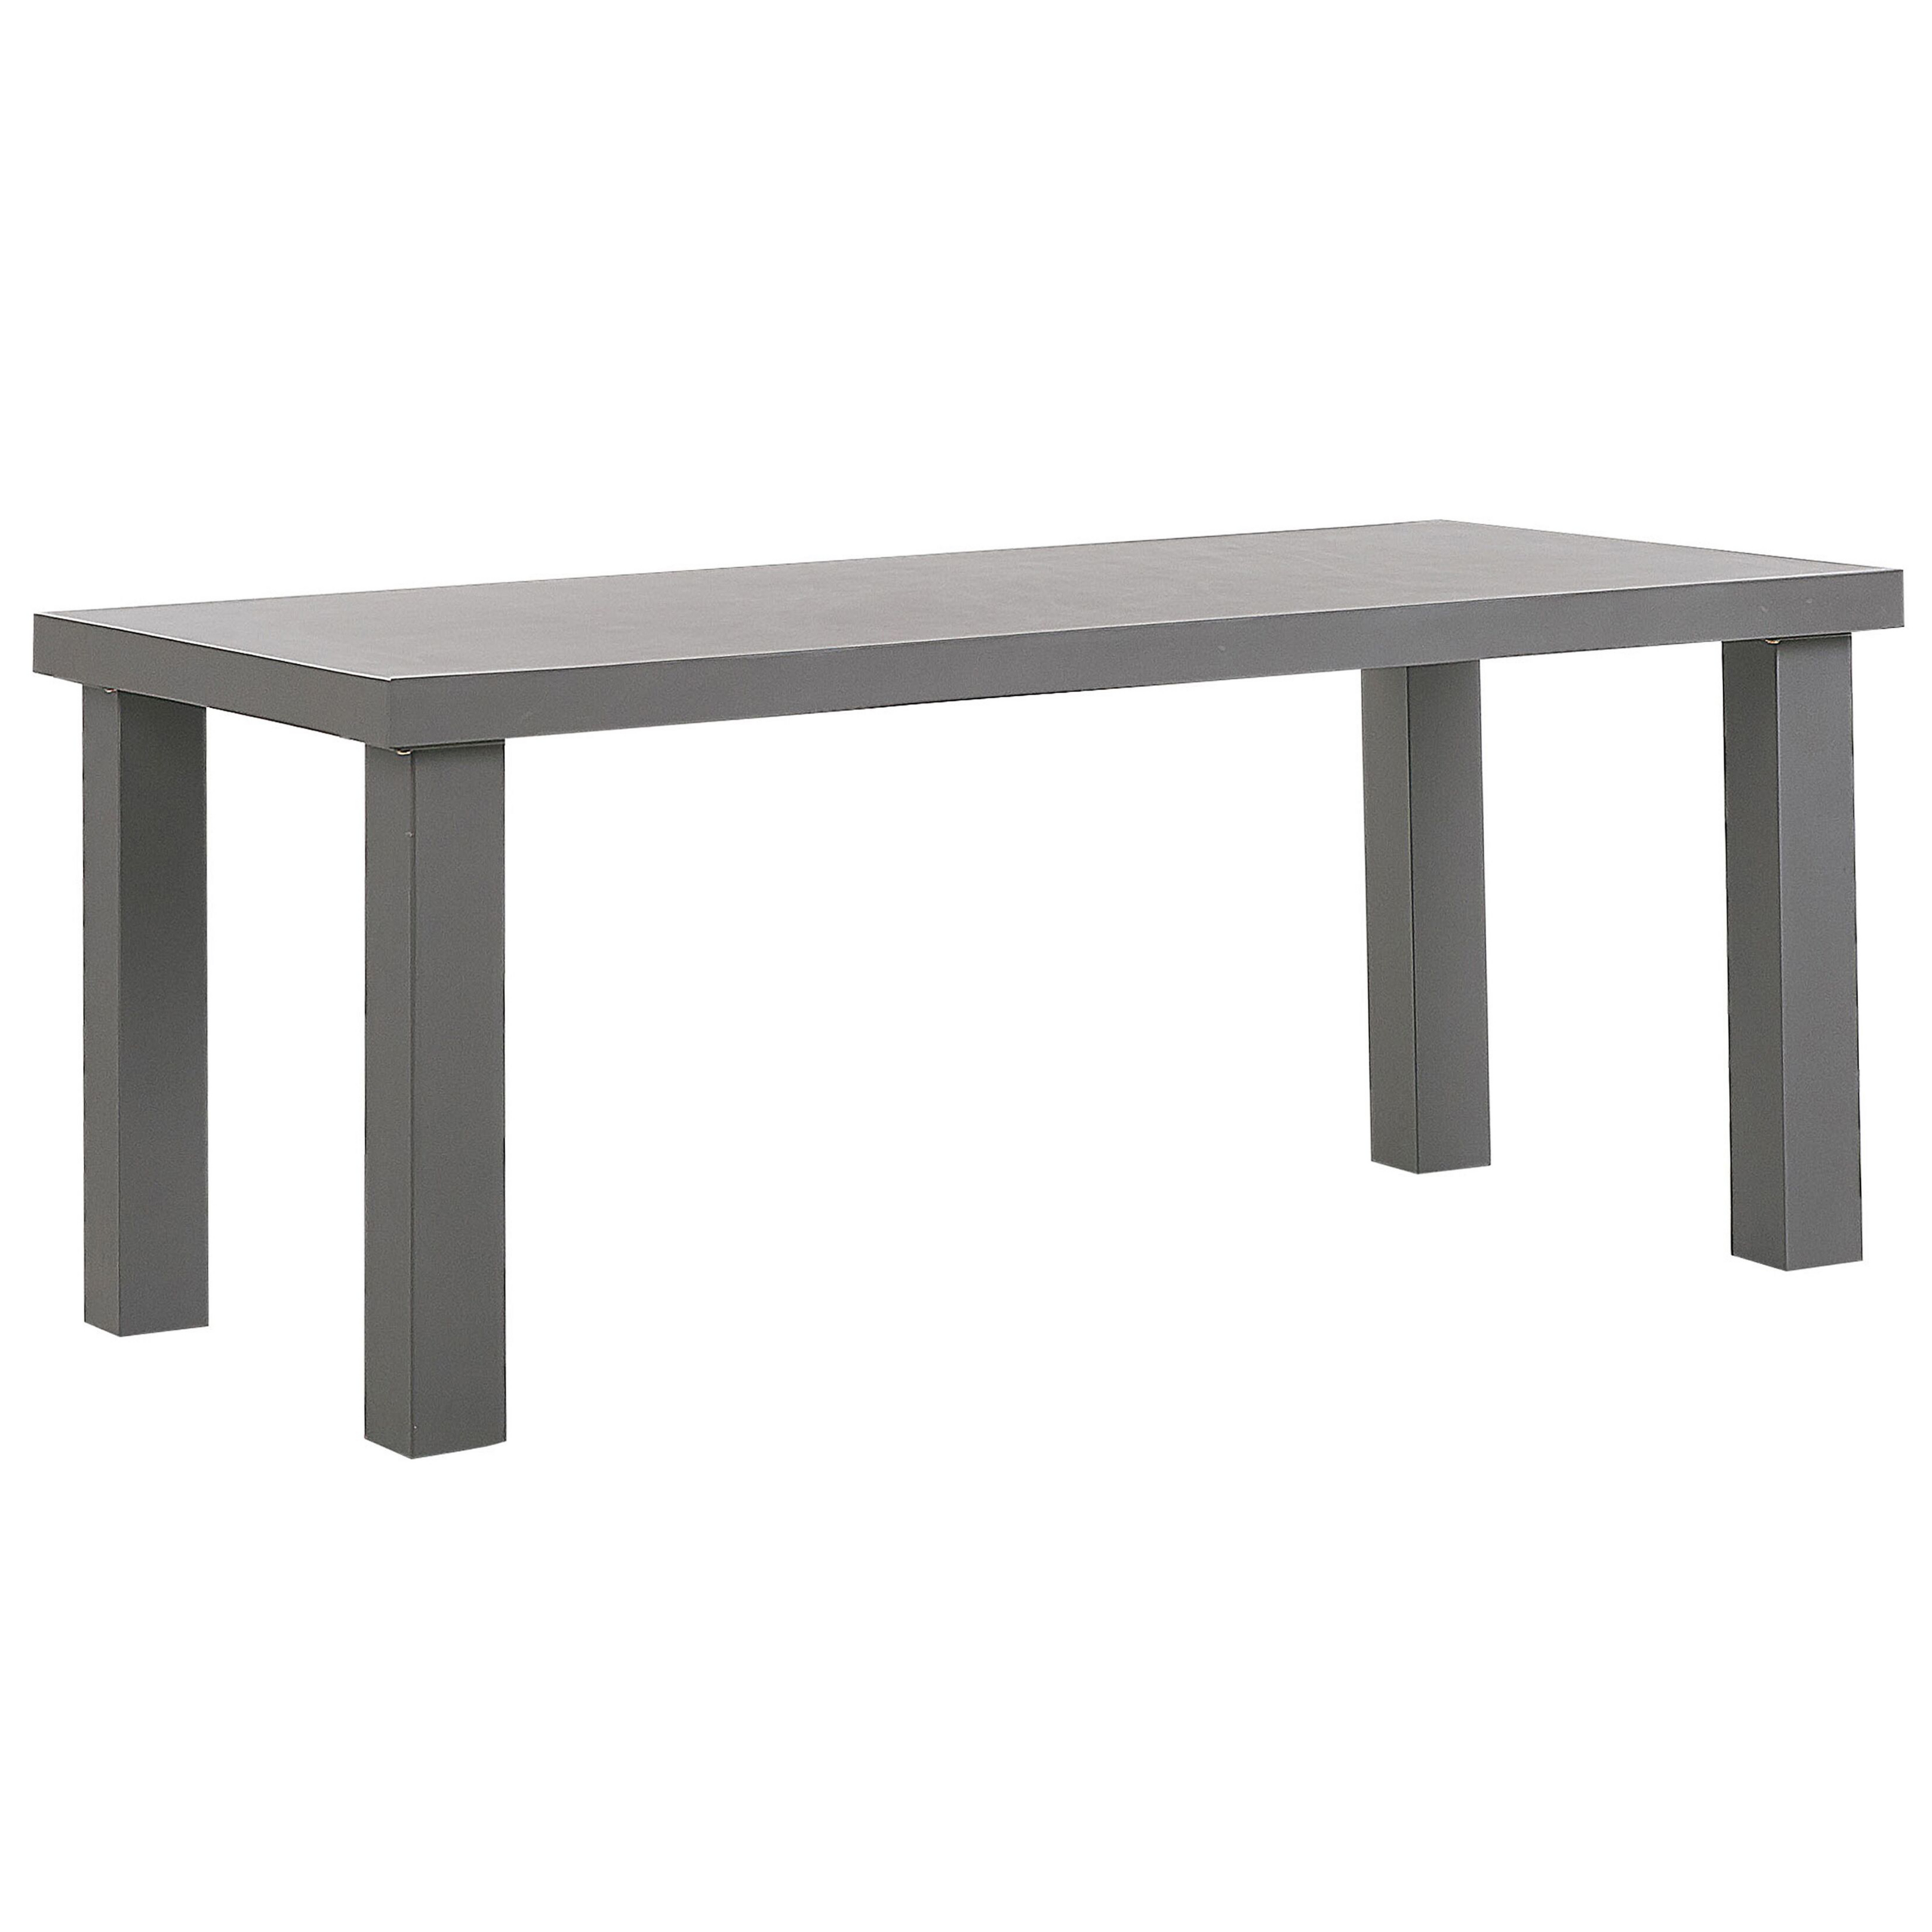 Beliani Garden Dining Table Grey Concrete 180 x 90 cm 6 Seater Water Resistant